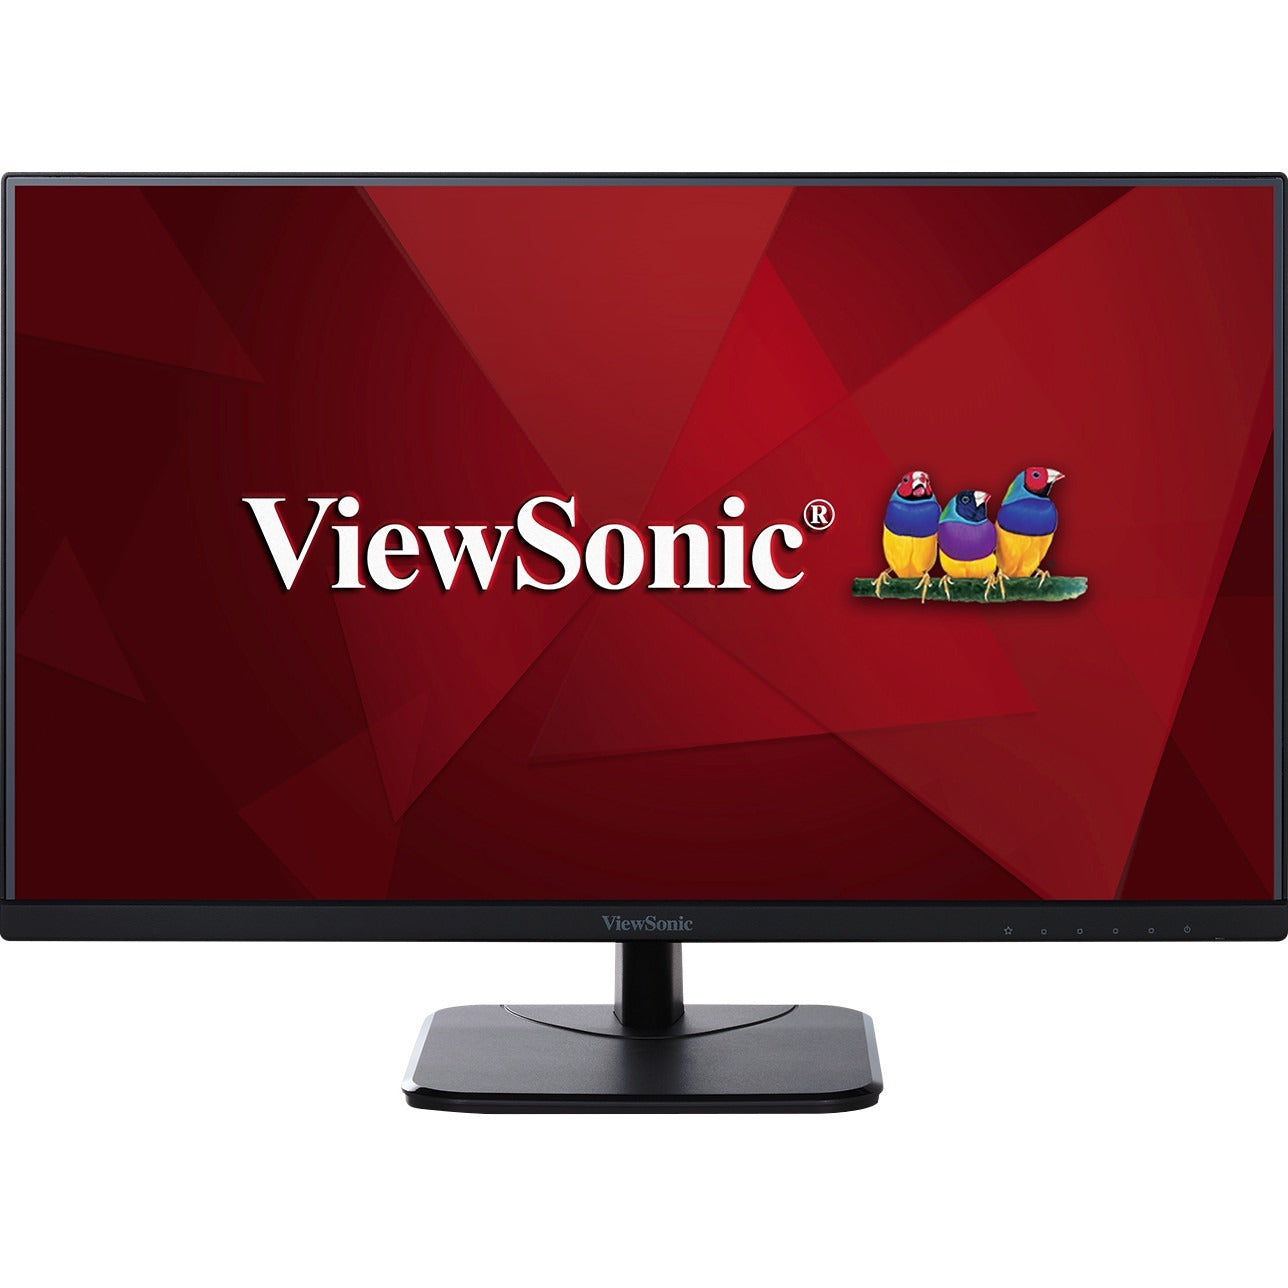 viewsonic-va2456-mhd-24-inch-ips-1080p-monitor-with-100hz-ultra-thin-bezels-hdmi-displayport-and-vga-inputs-for-home-and-office-va2456-mhd-ips-1080p-monitor-with-100hz-ultra-thin-bezels-hdmi-displayport-and-vga-250-cd-m2-24_vewva2456mhd - 3